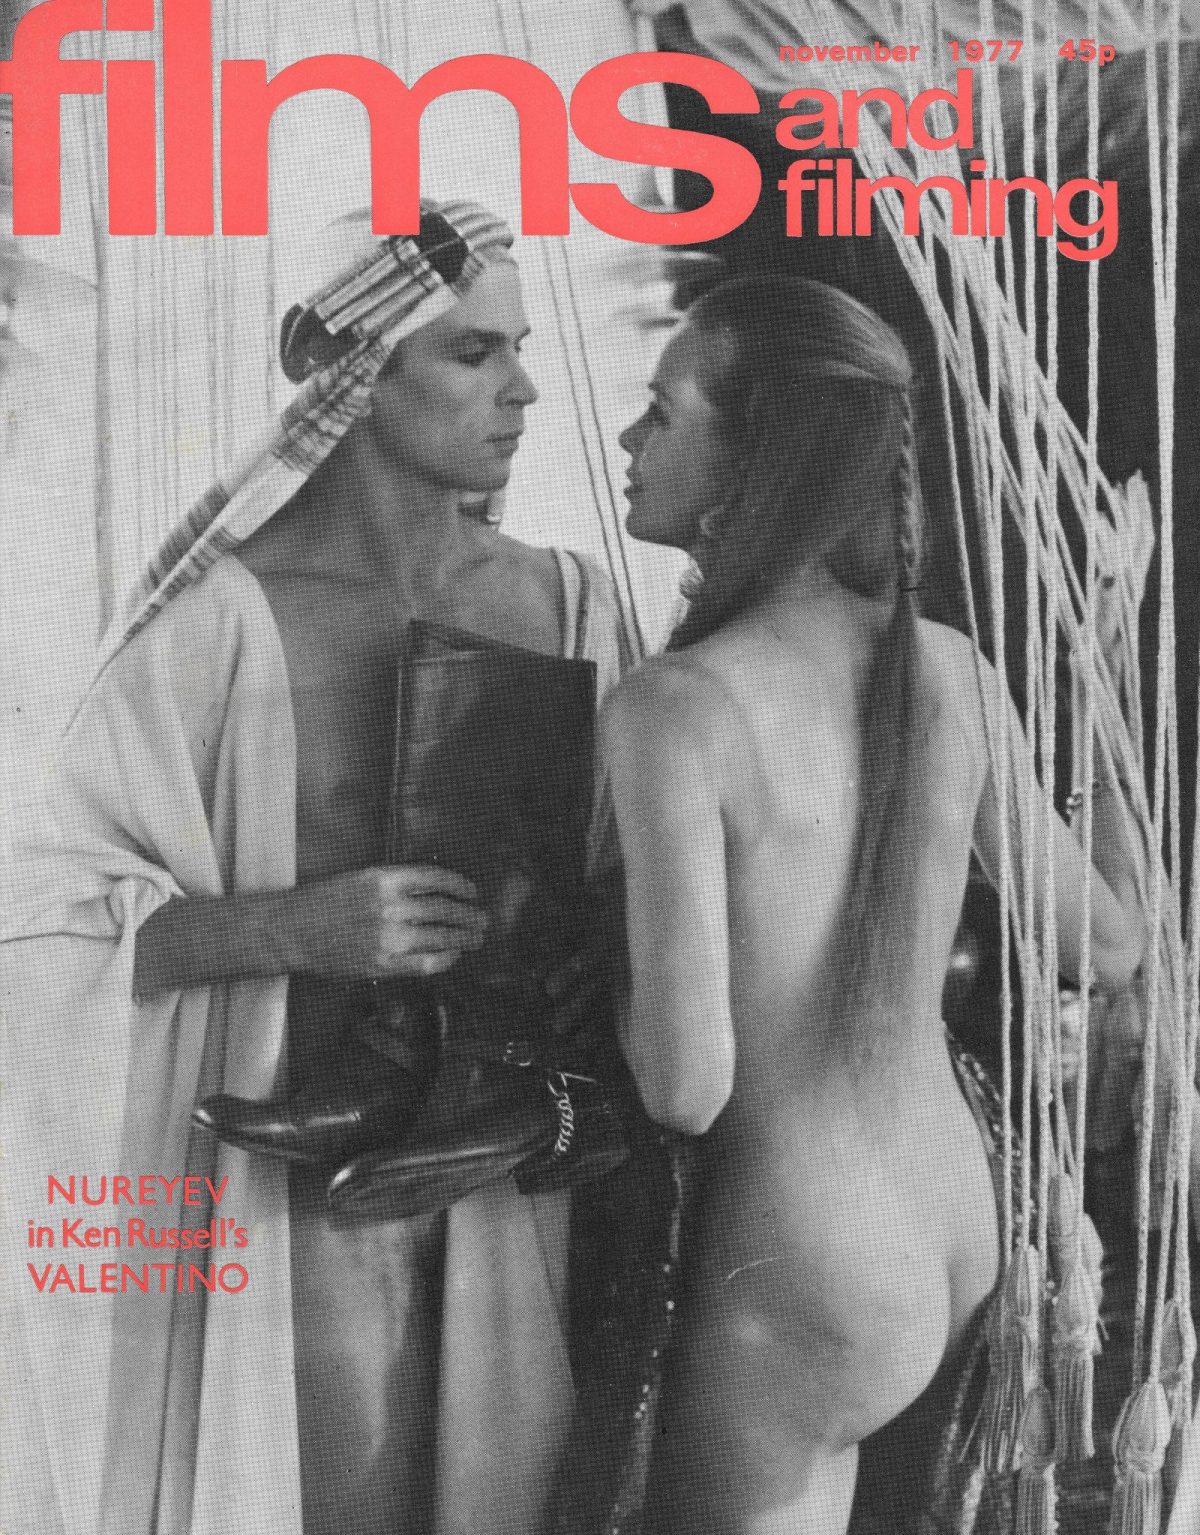 Films & Filming, film, magazines, Ken Russell, Valentino, Rudolf Nureyev, 1970s